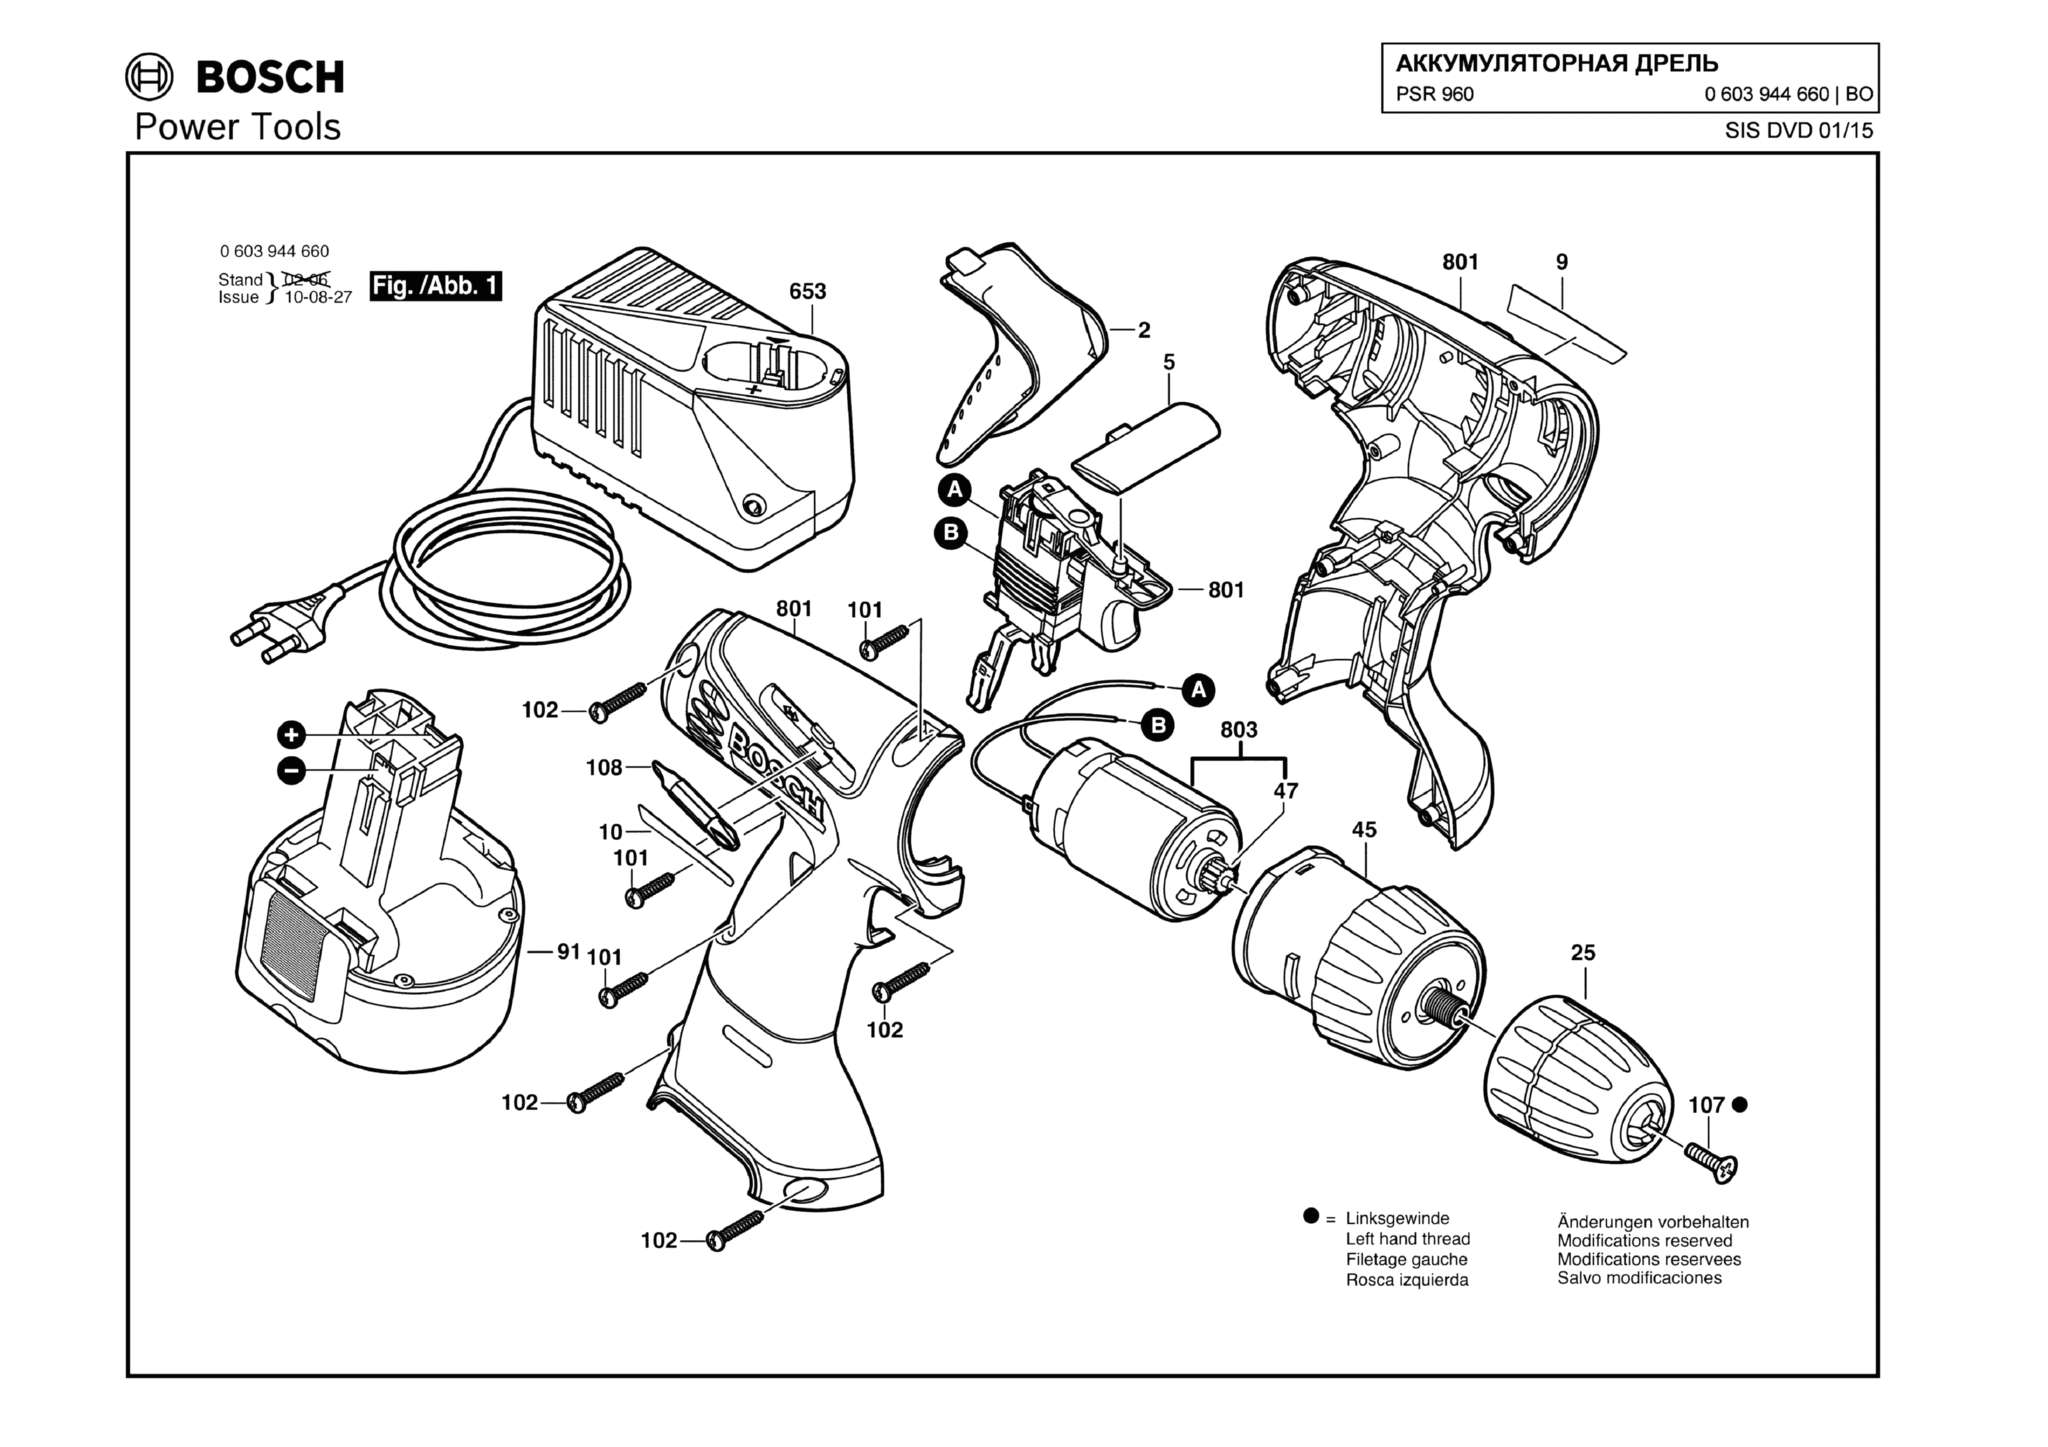 Запчасти, схема и деталировка Bosch PSR 960 (ТИП 0603944660)